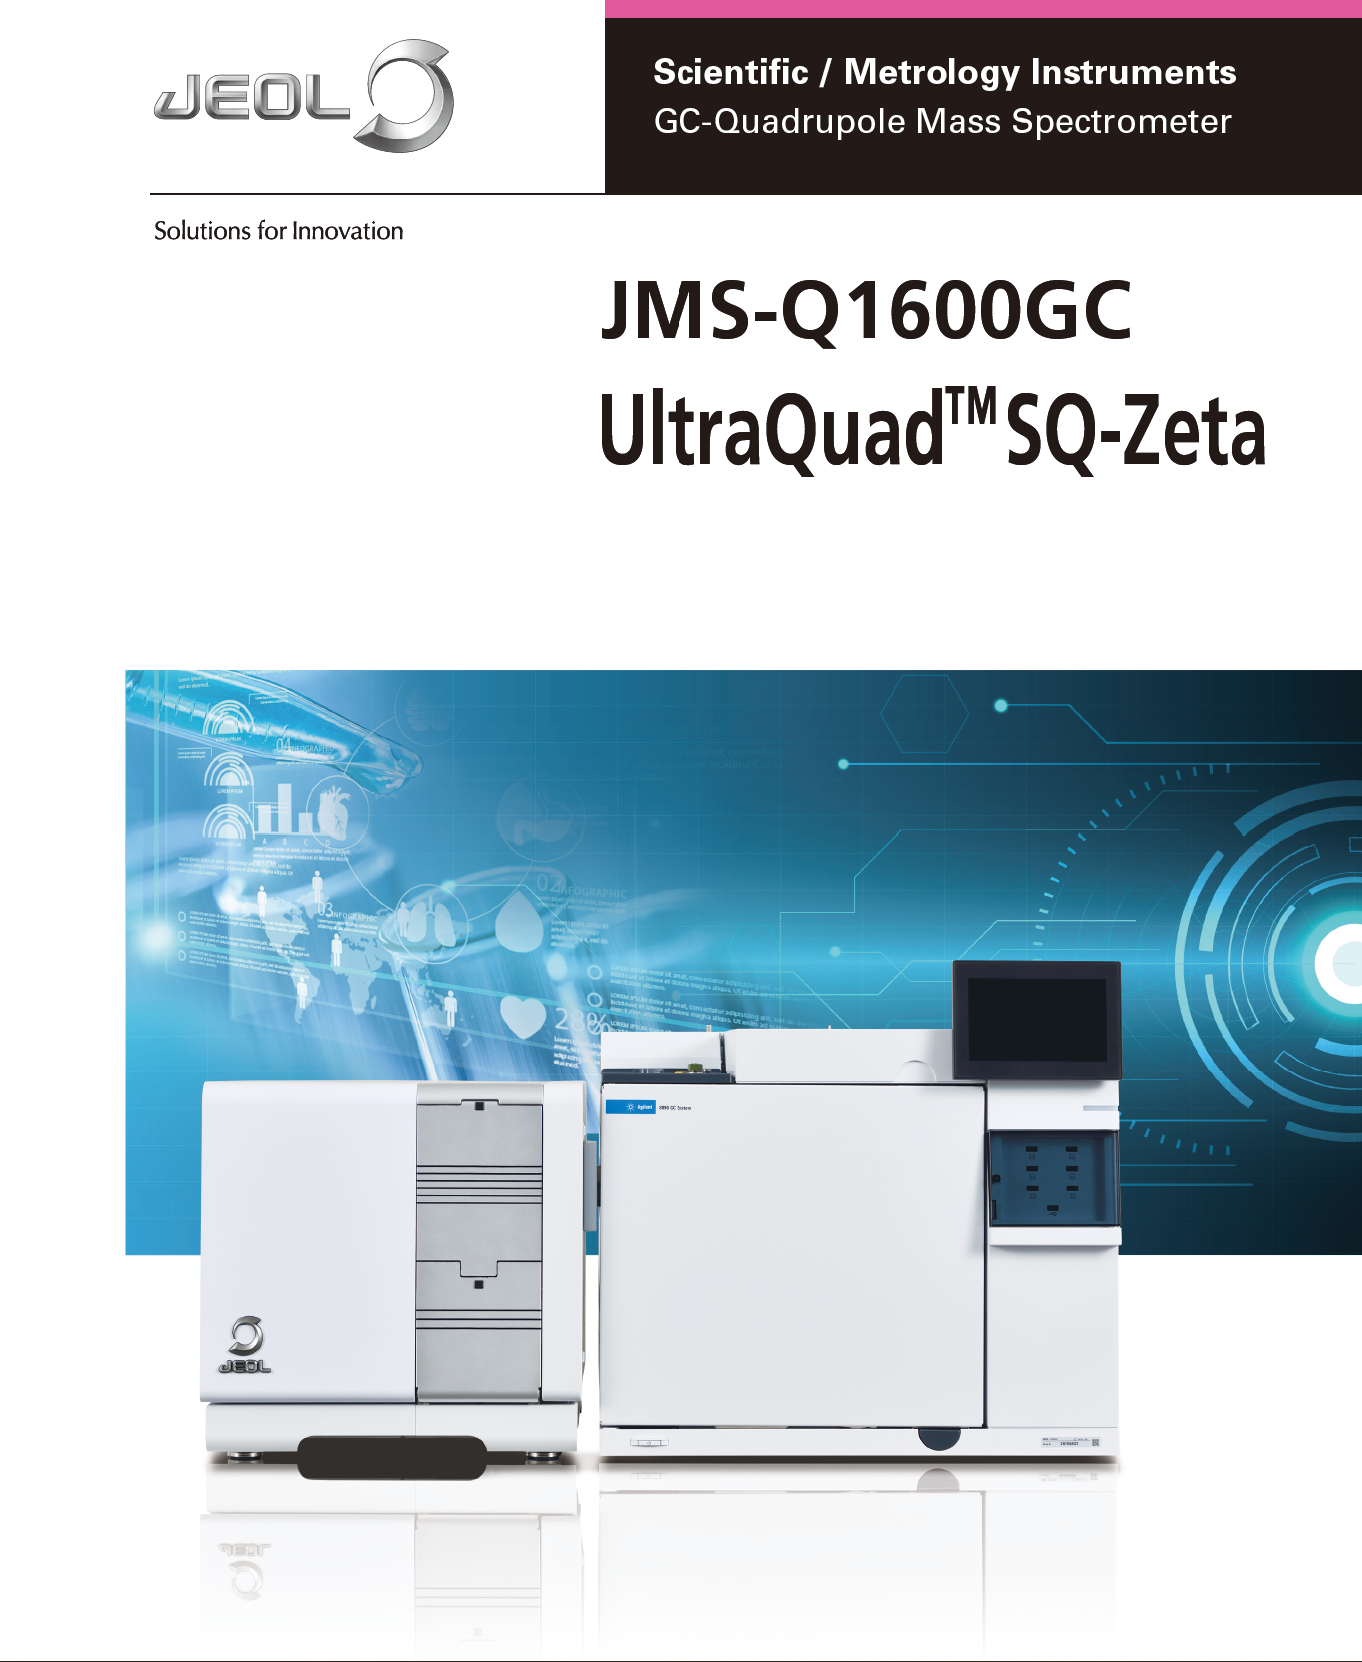 Download the JMS-Q1600GC product brochure